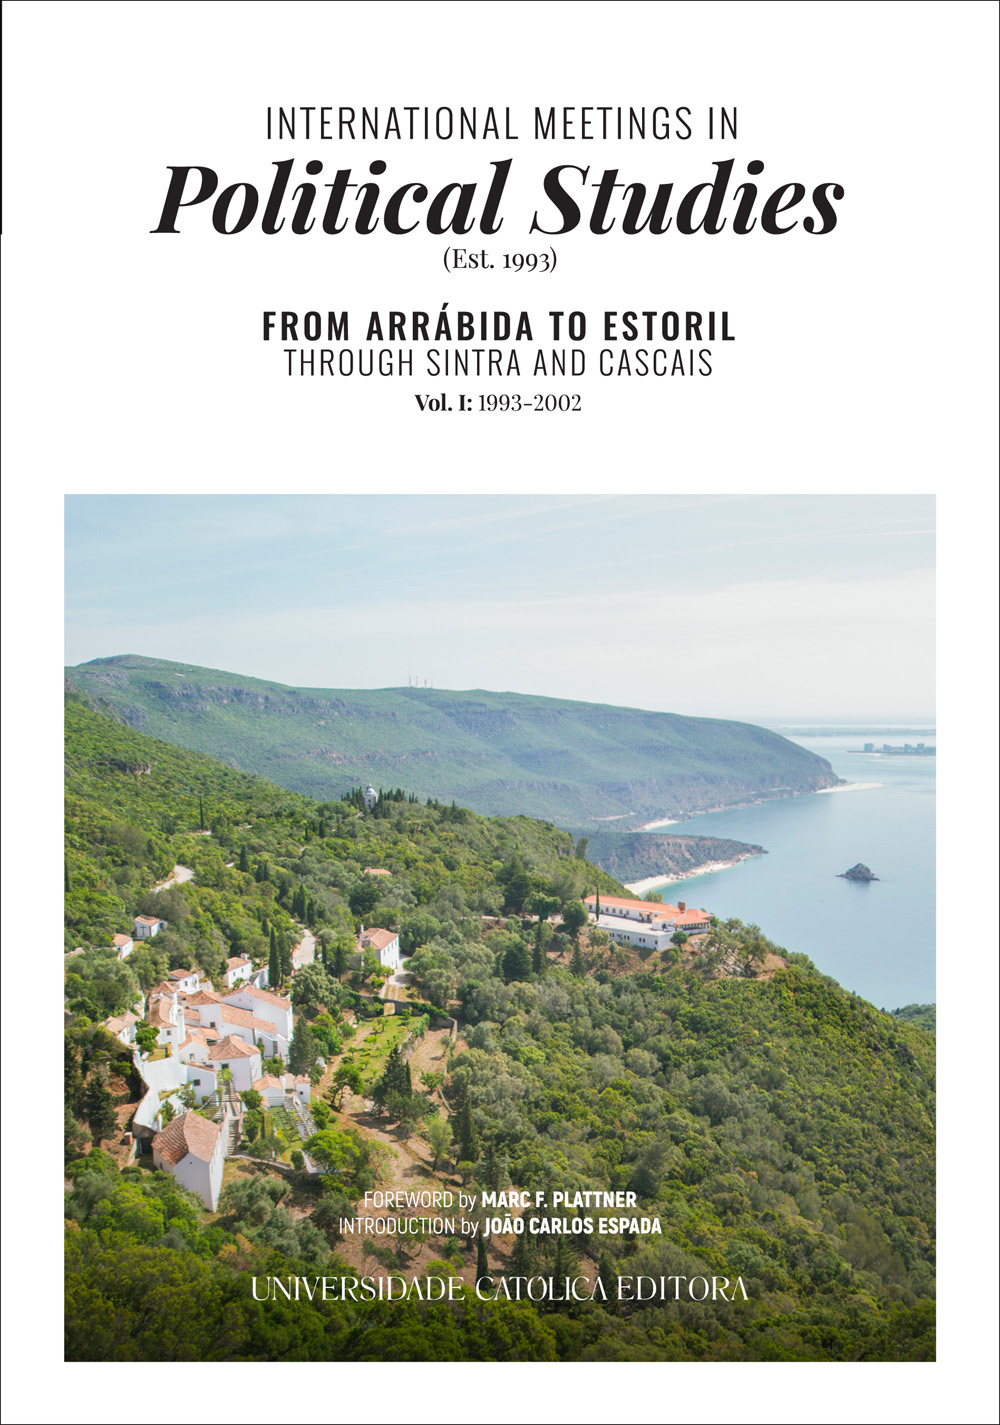 INTERNATIONAL MEETINGS IN POLITICAL STUDIES (EST. 1993)
From Arrábida to Estoril, through Sintra and Cascais Vol. I: 1993-2023